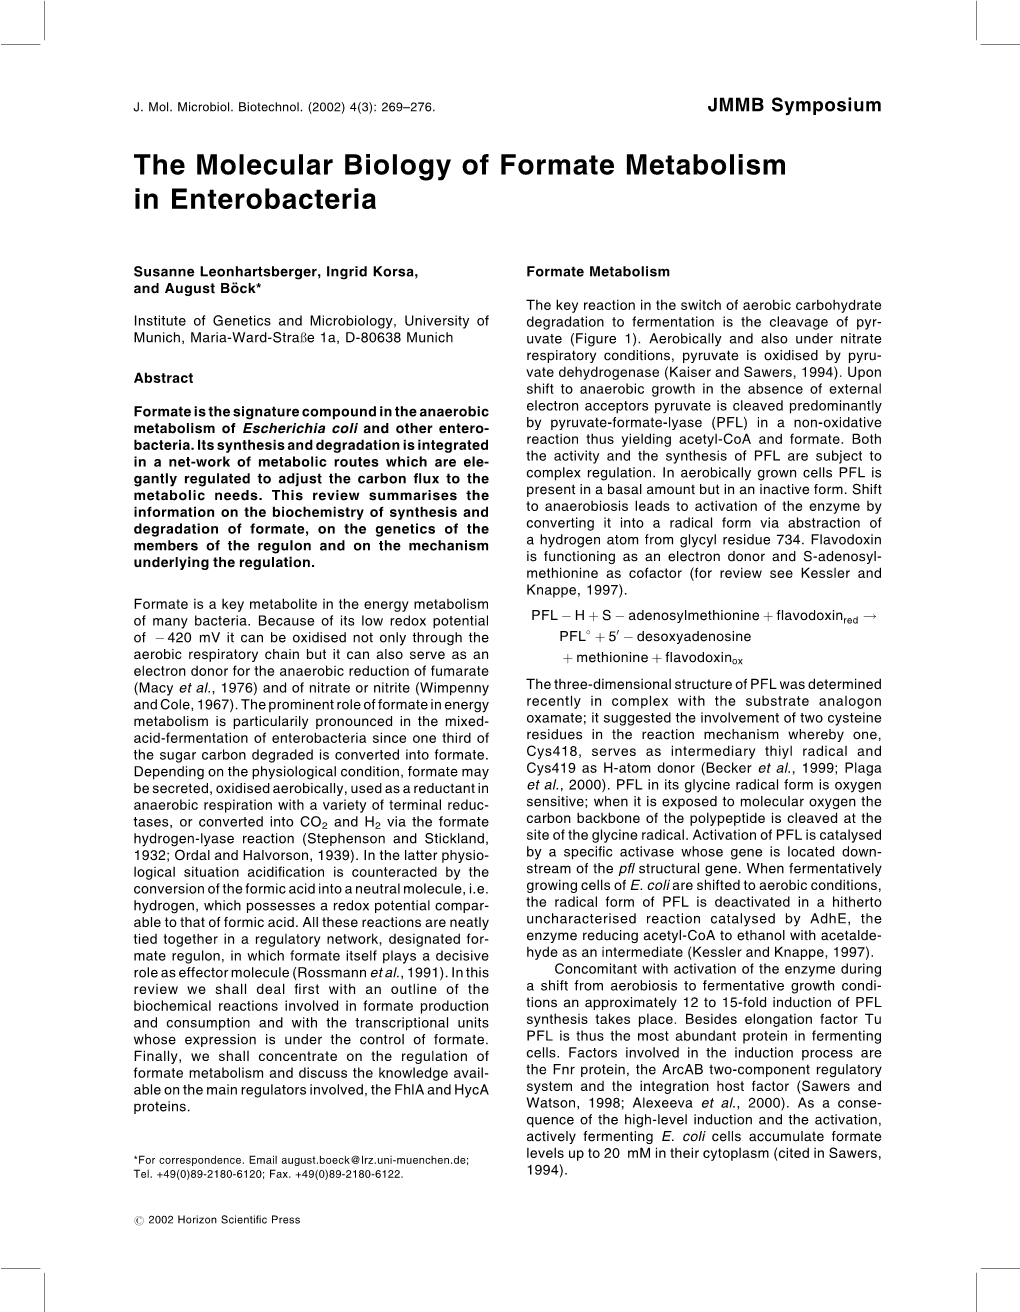 The Molecular Biology of Formate Metabolism in Enterobacteria